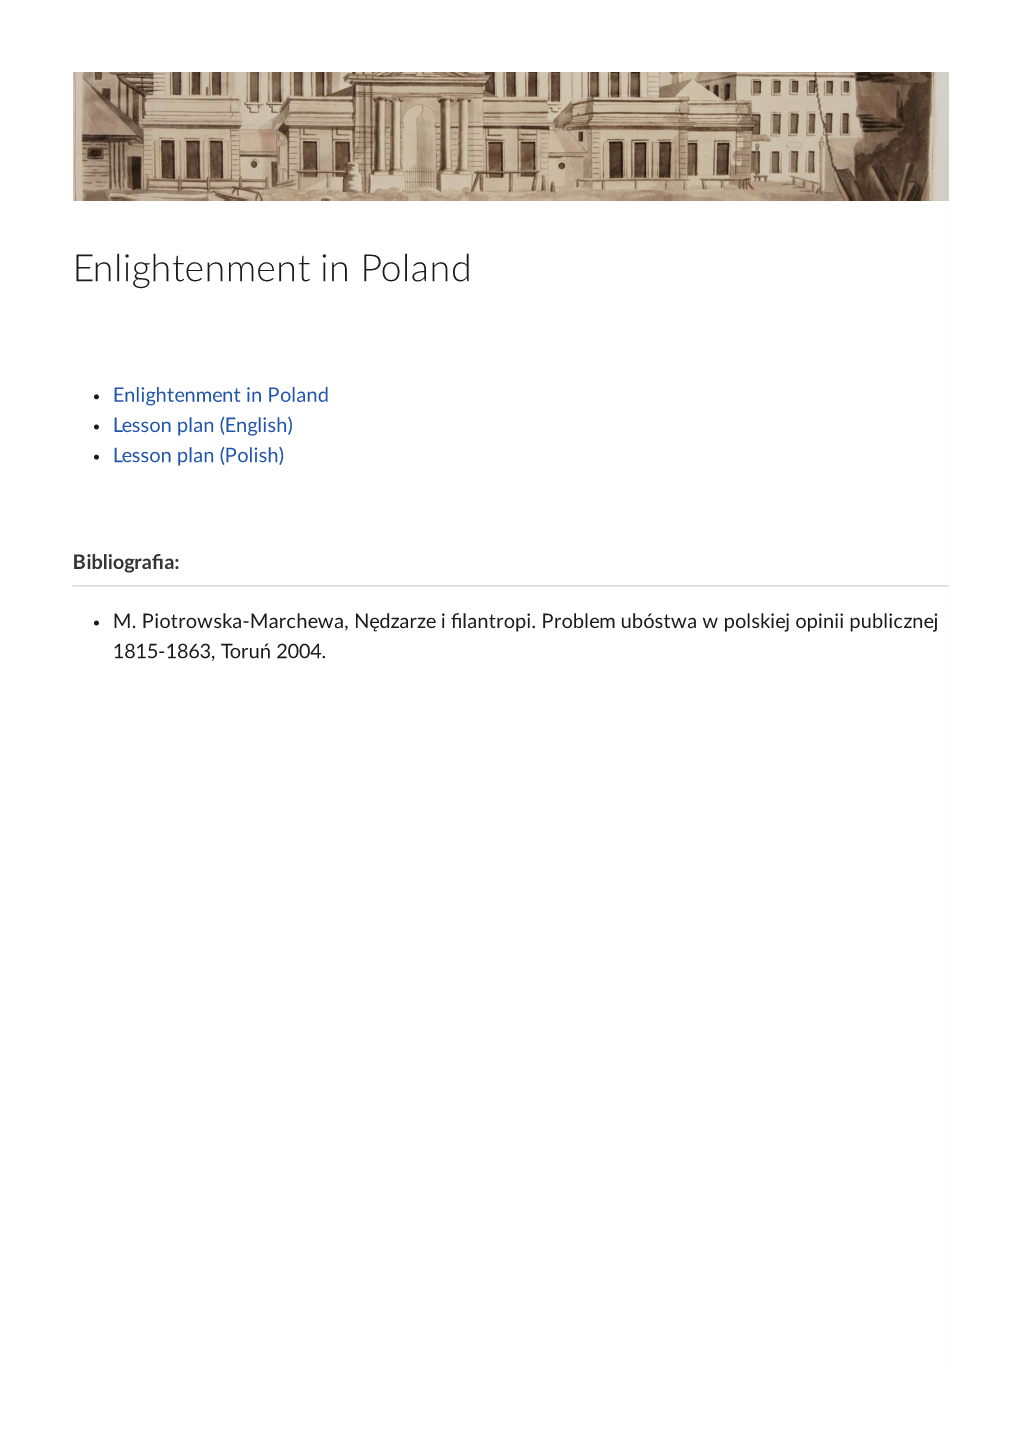 Enlightenment in Poland